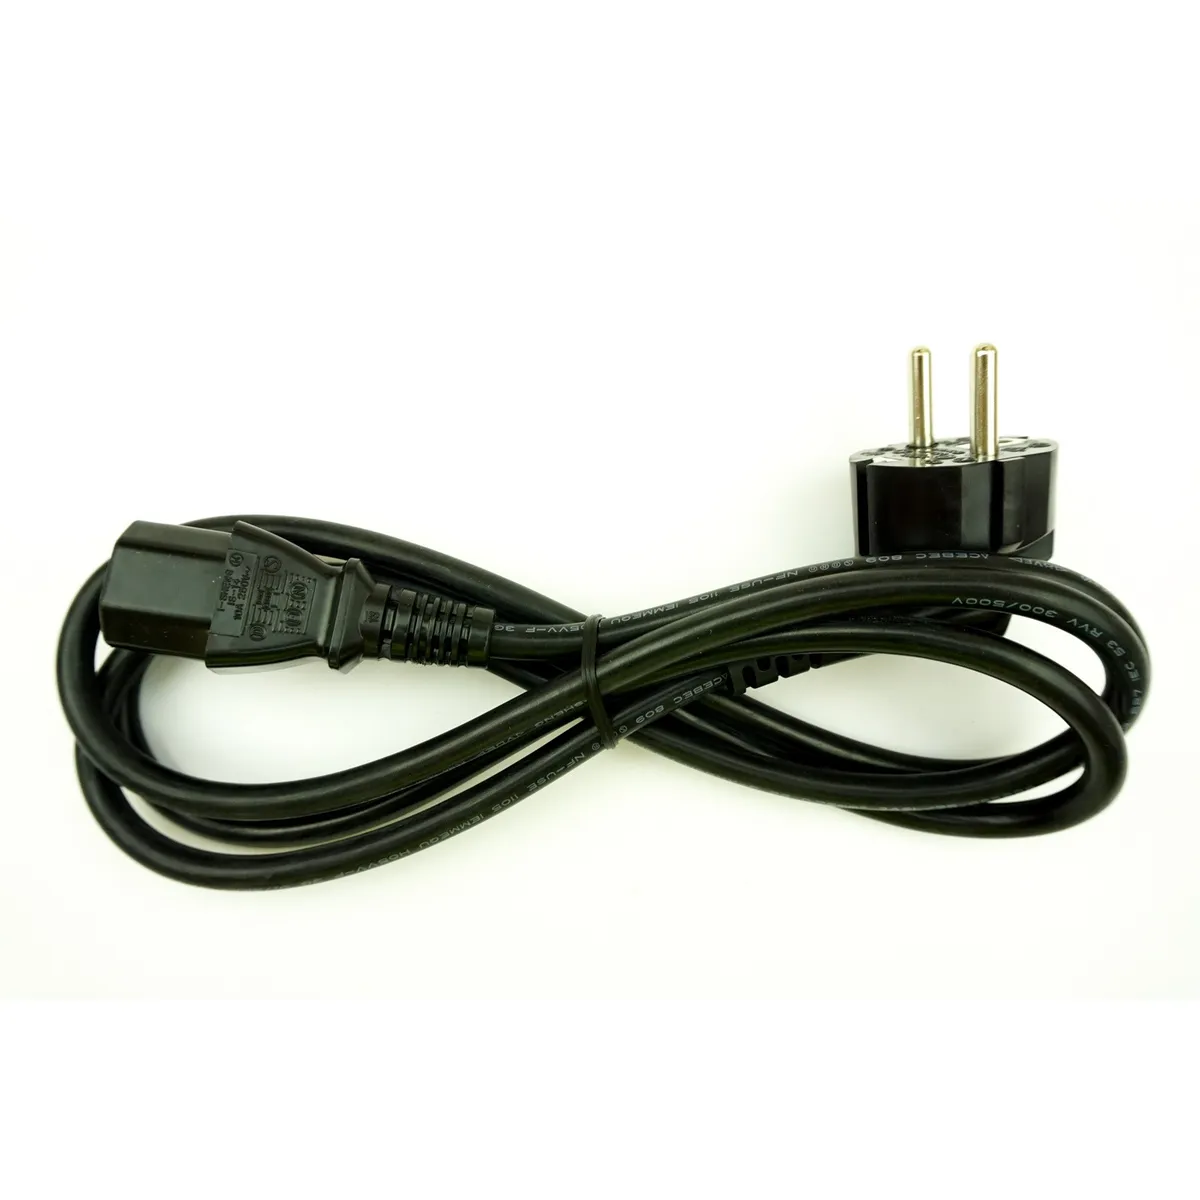 EU Plug to C13 (Kettle Lead) Power Cable